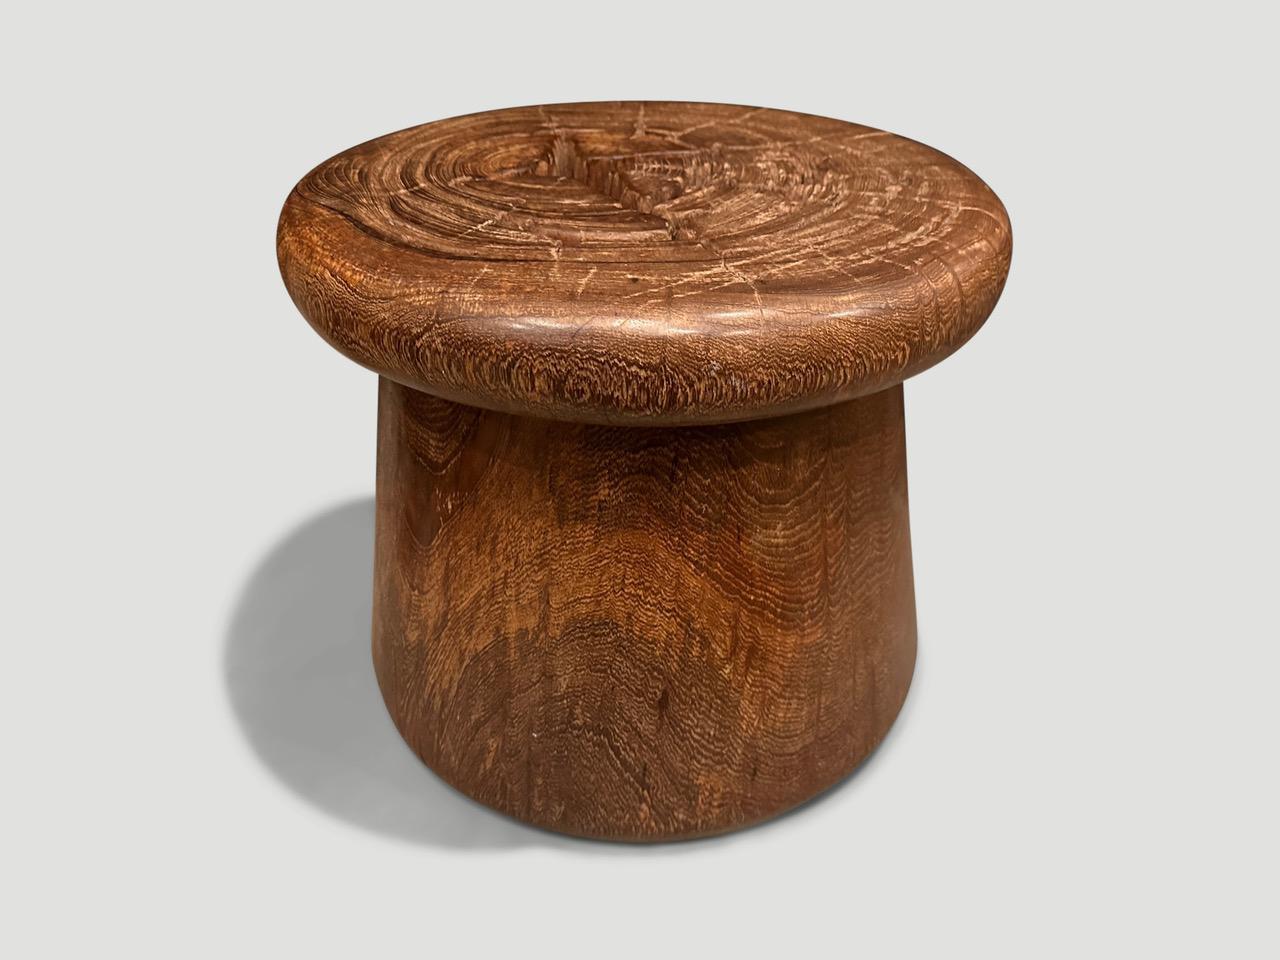 Andrianna Shamaris Century Old Teak Wood Side Table or Stool  For Sale 1